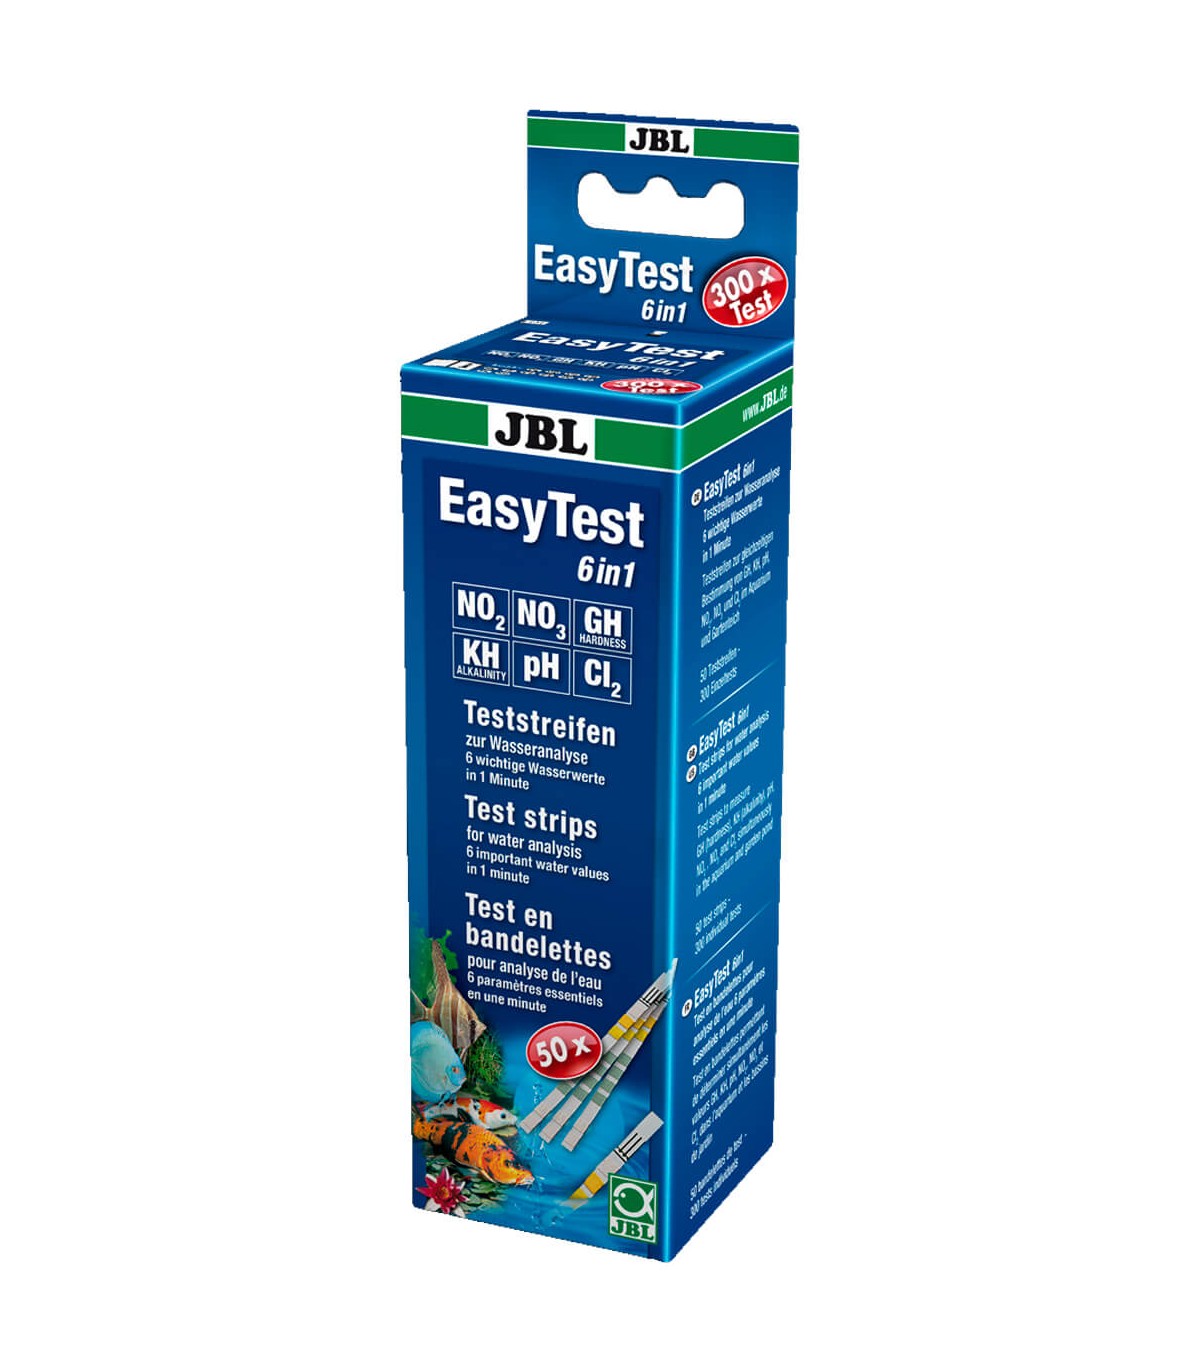 JBL EasyTest 6in1 - Test acquario